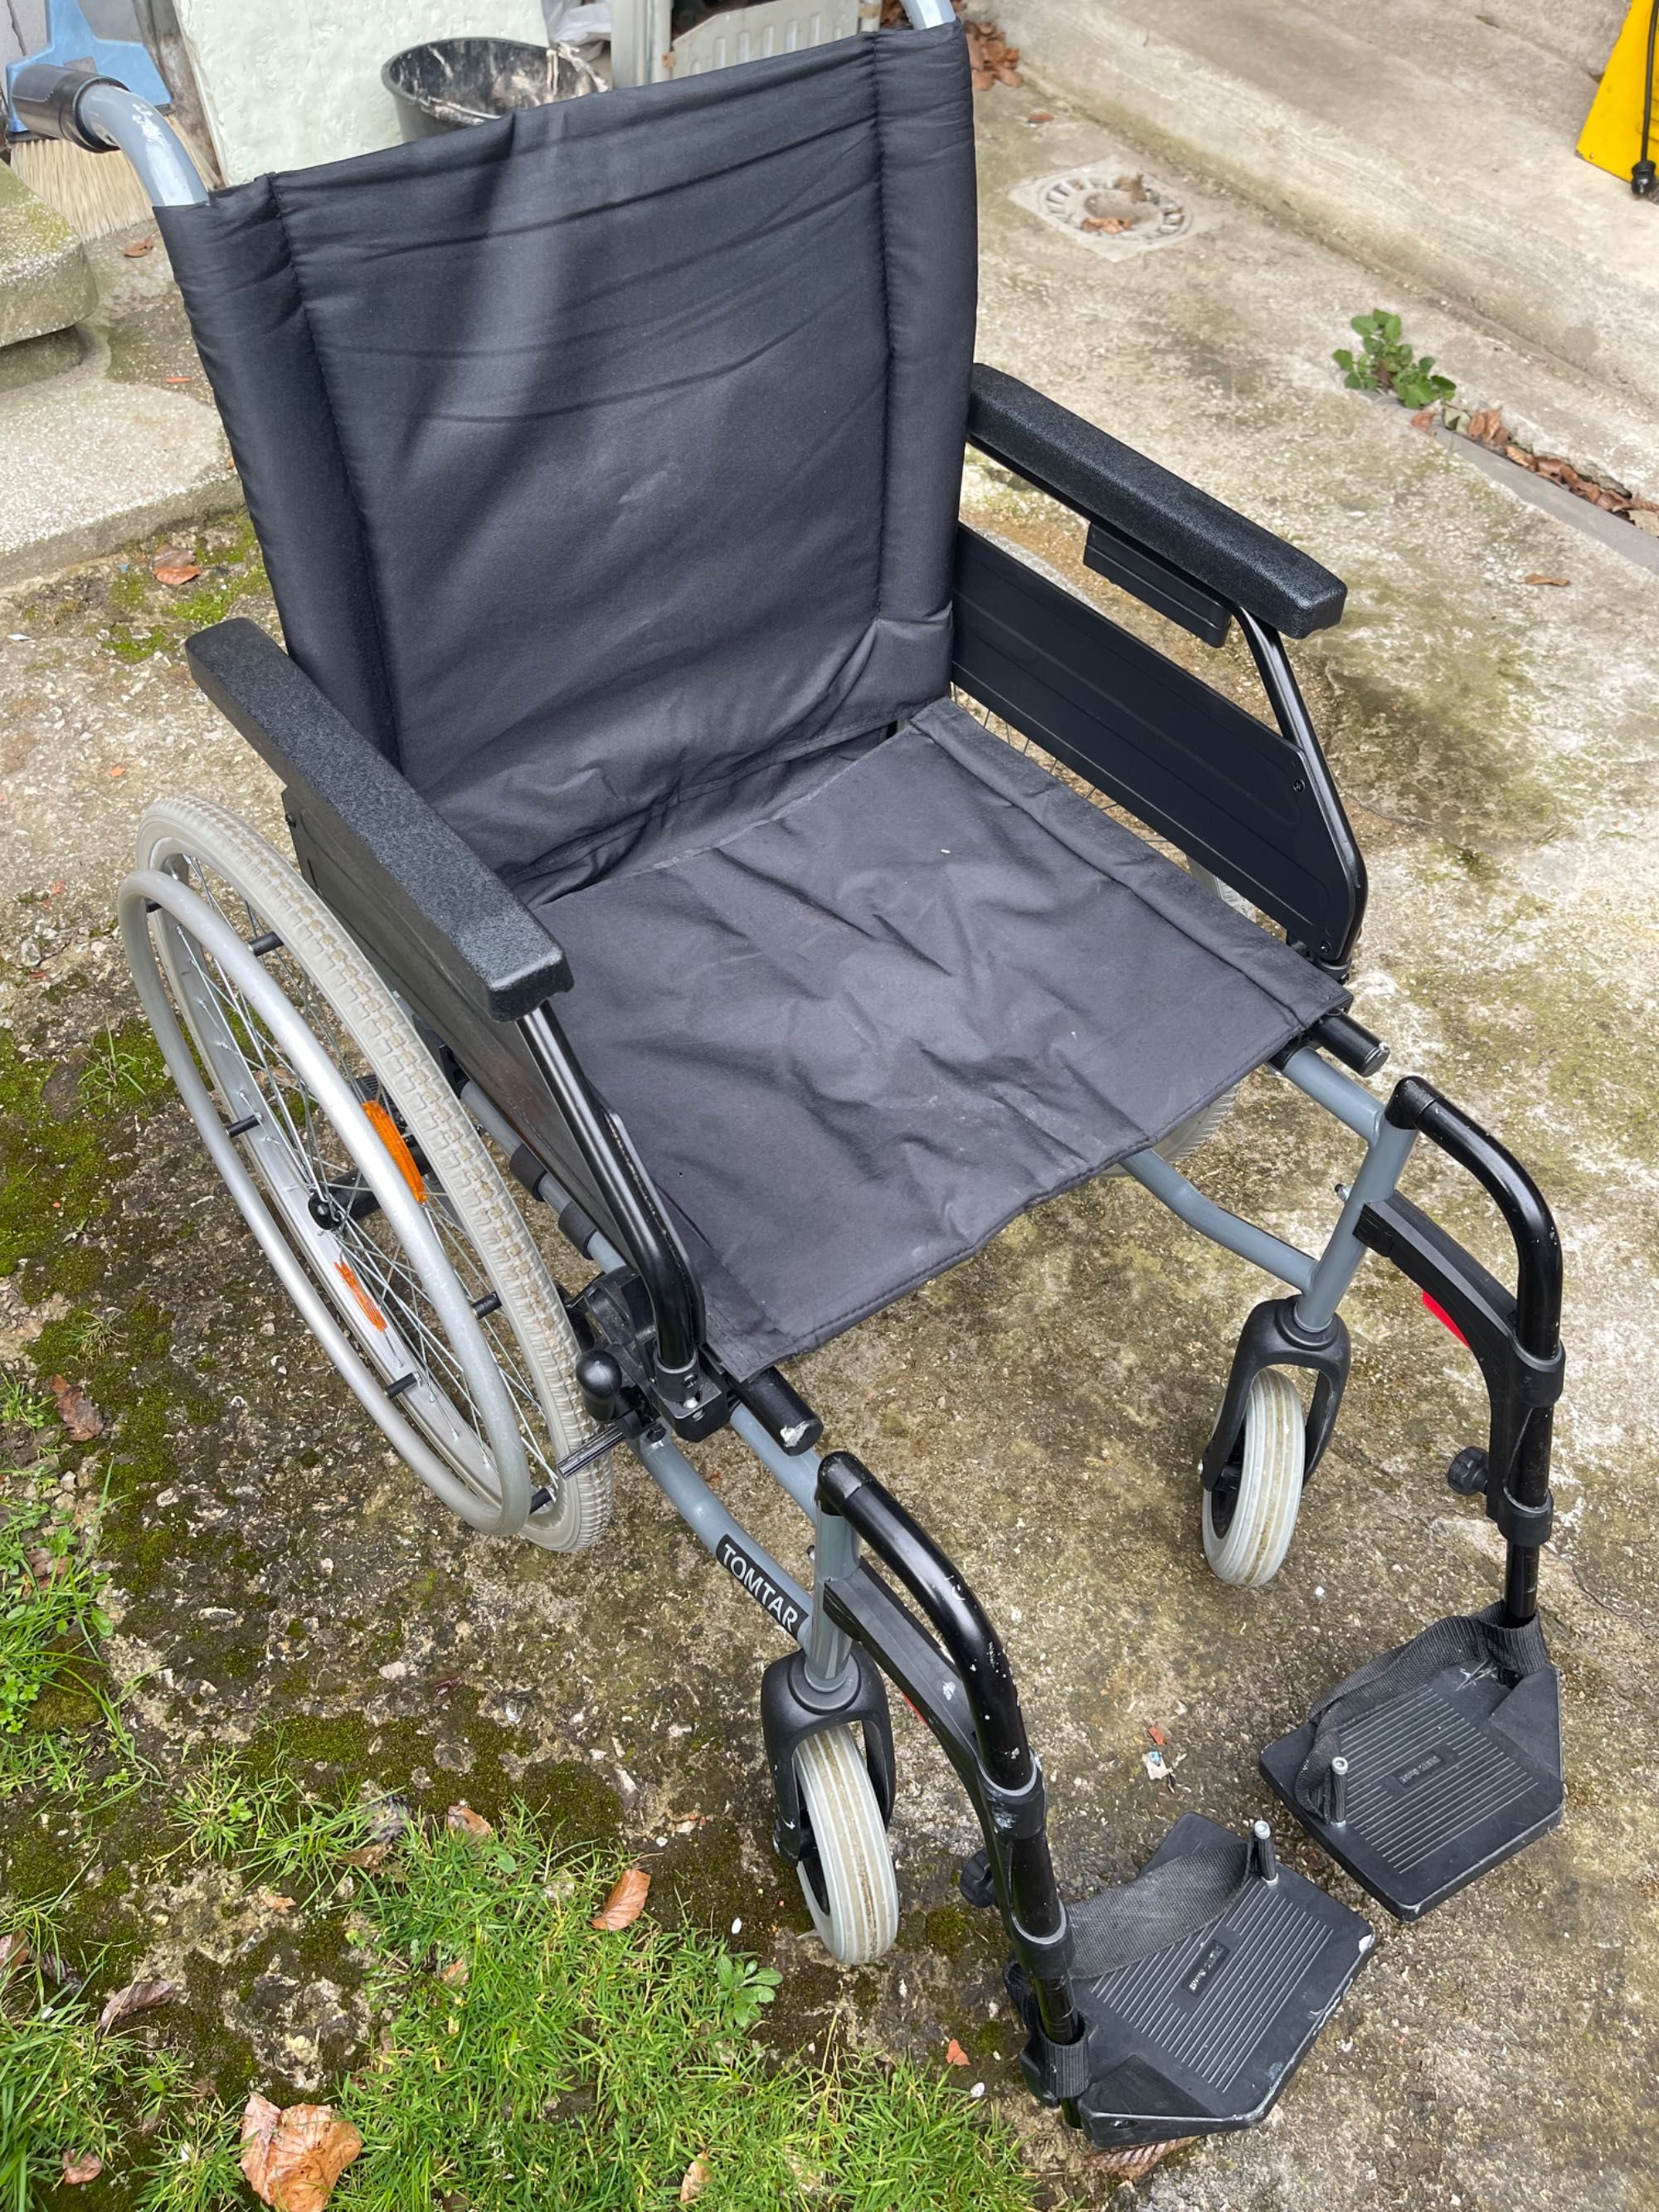 Scaun cu rotile Carucior pliabil pentru persoane cu handicap !!